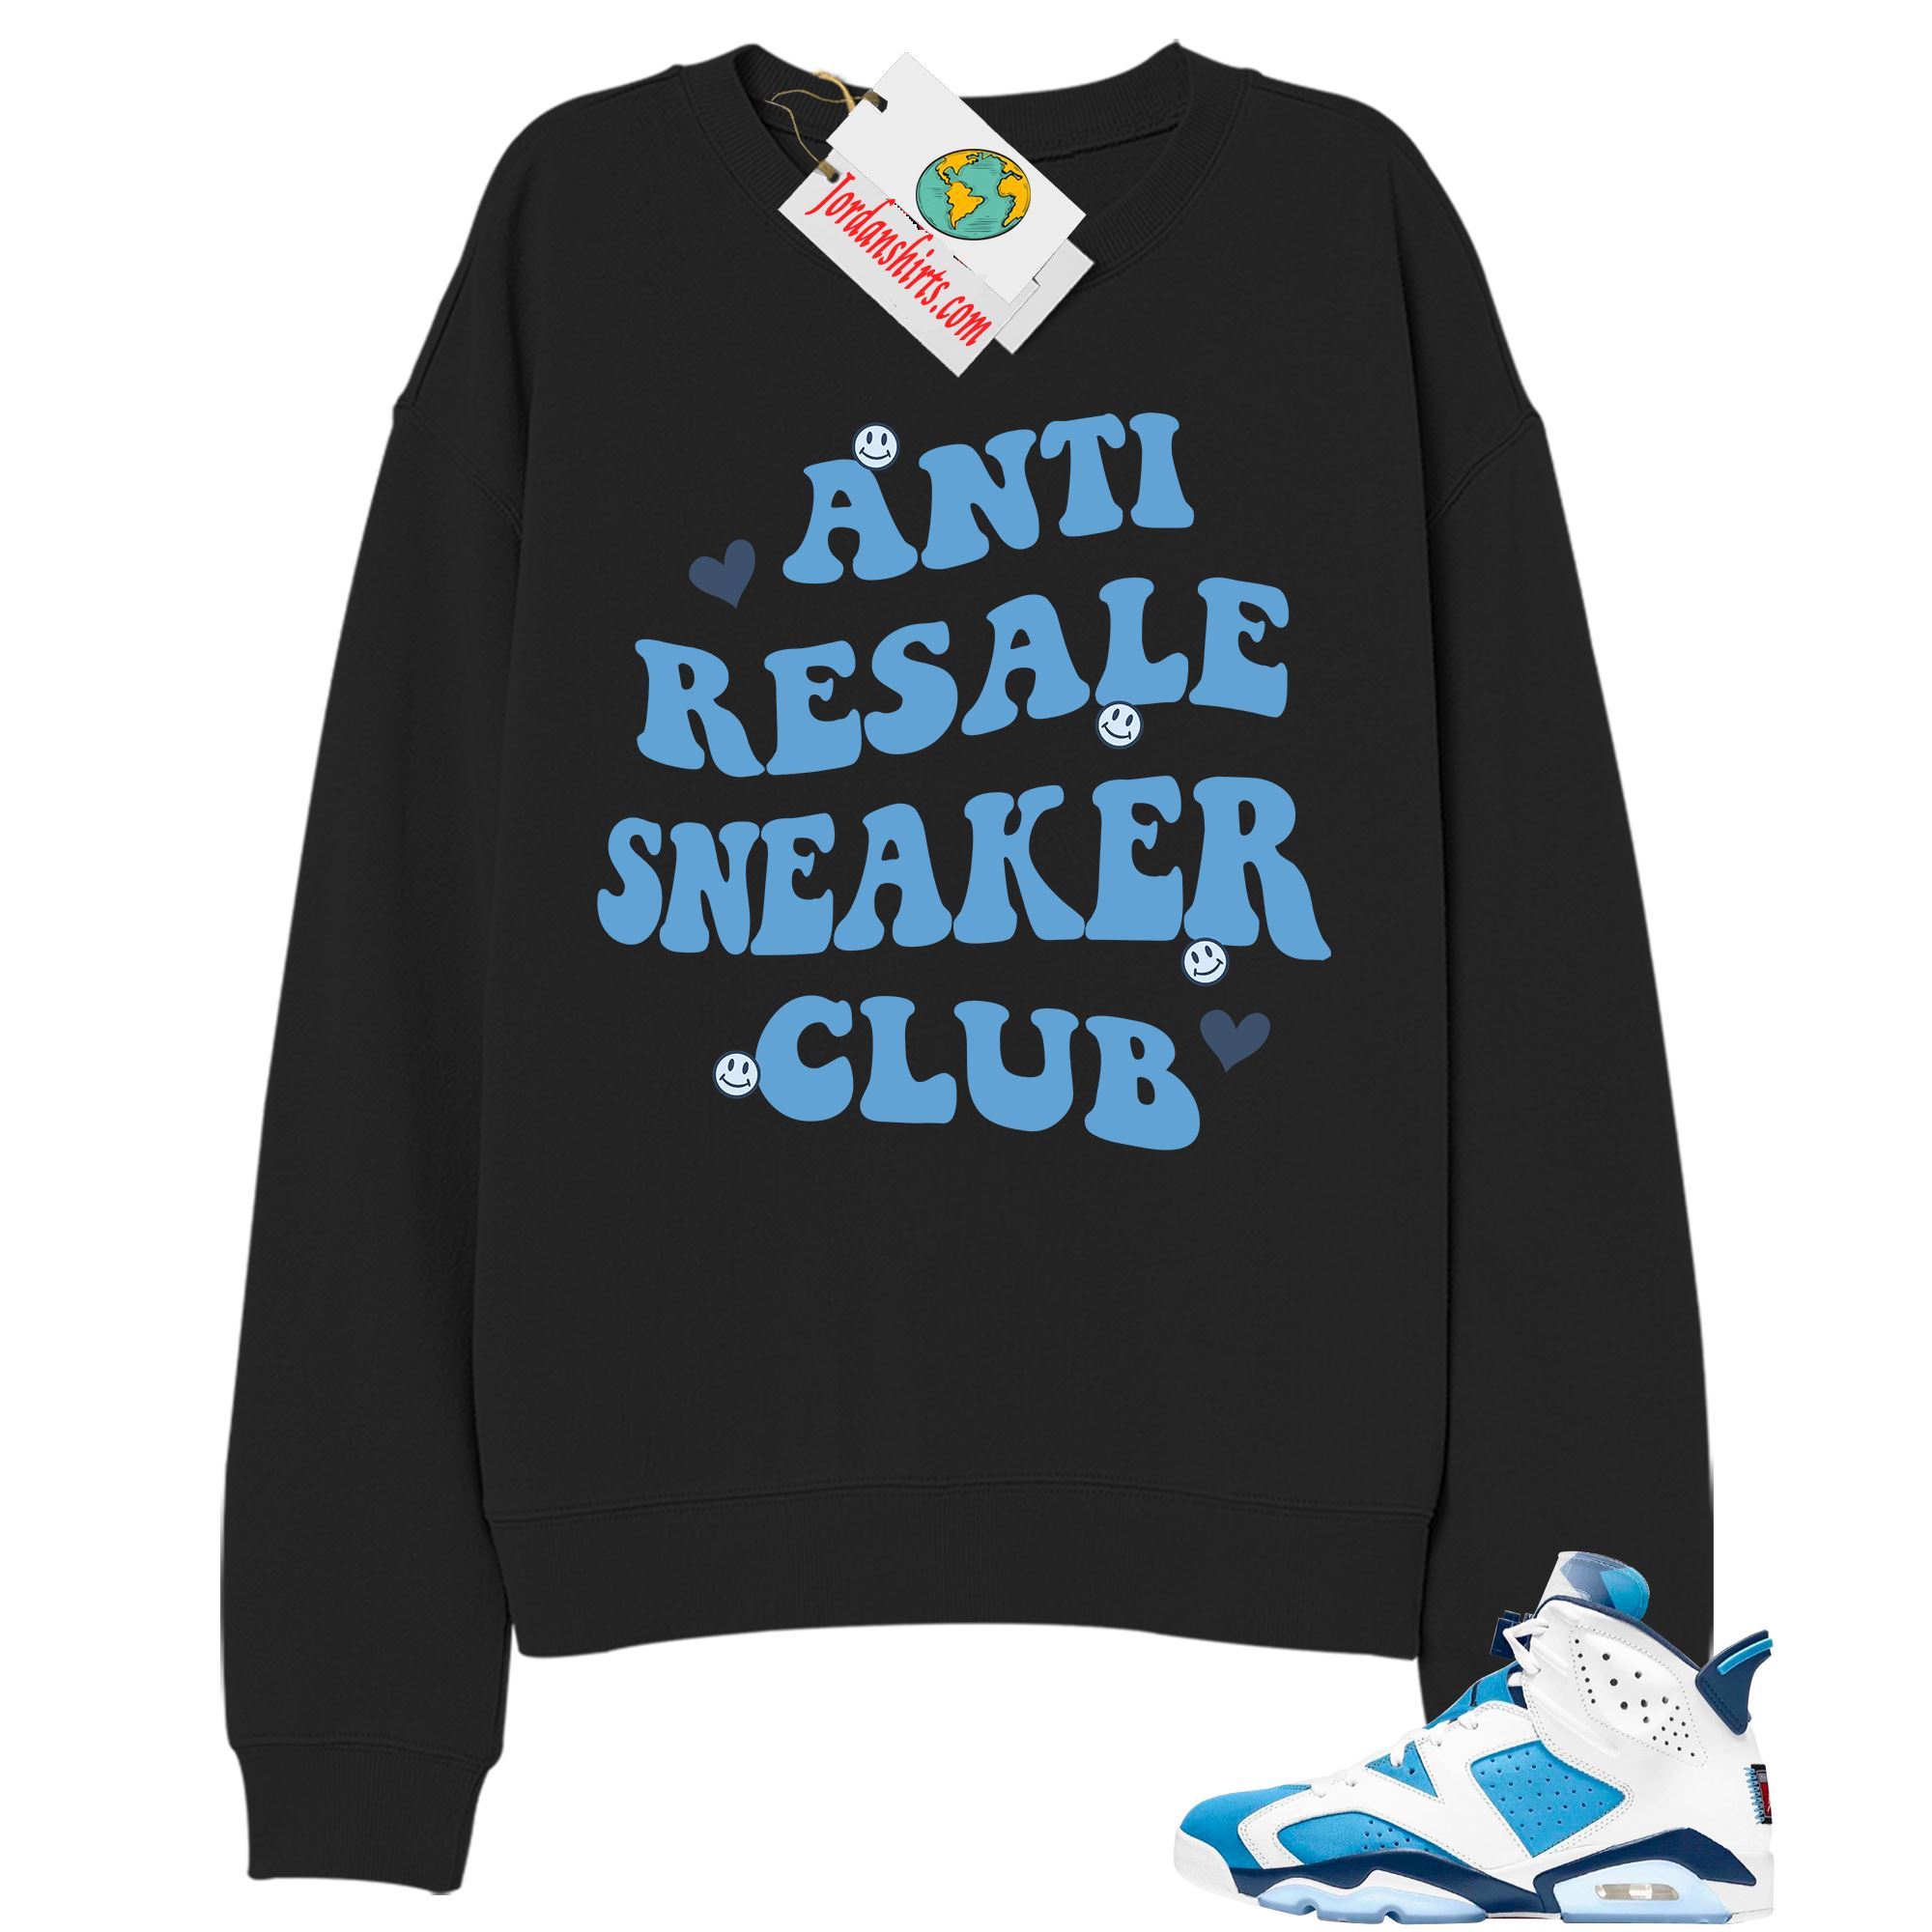 Jordan 6 Sweatshirt, Anti Resale Sneaker Club Black Sweatshirt Air Jordan 6 Unc 6s Size Up To 5xl